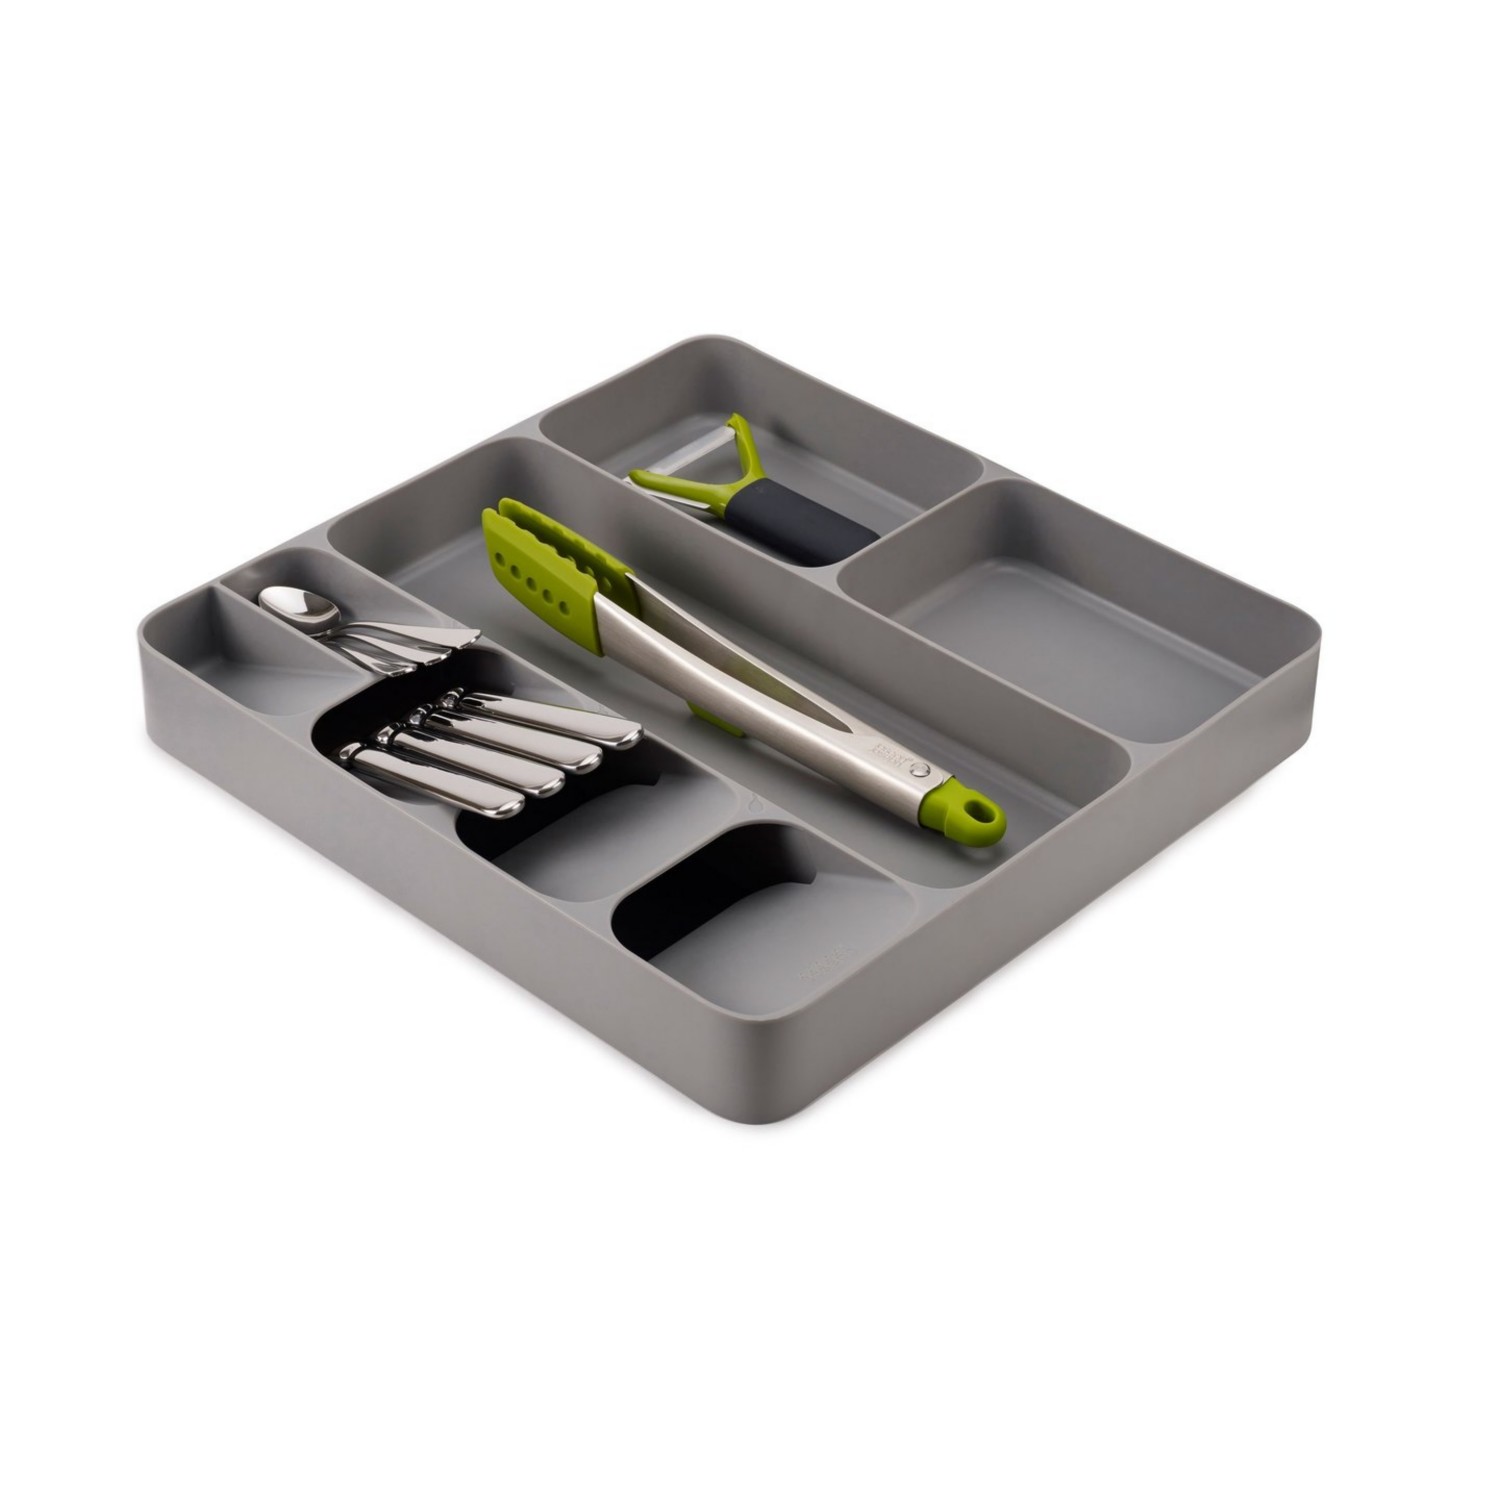 Cutlery utensil and gadget organiser Grey DrawerStore Joseph Joseph